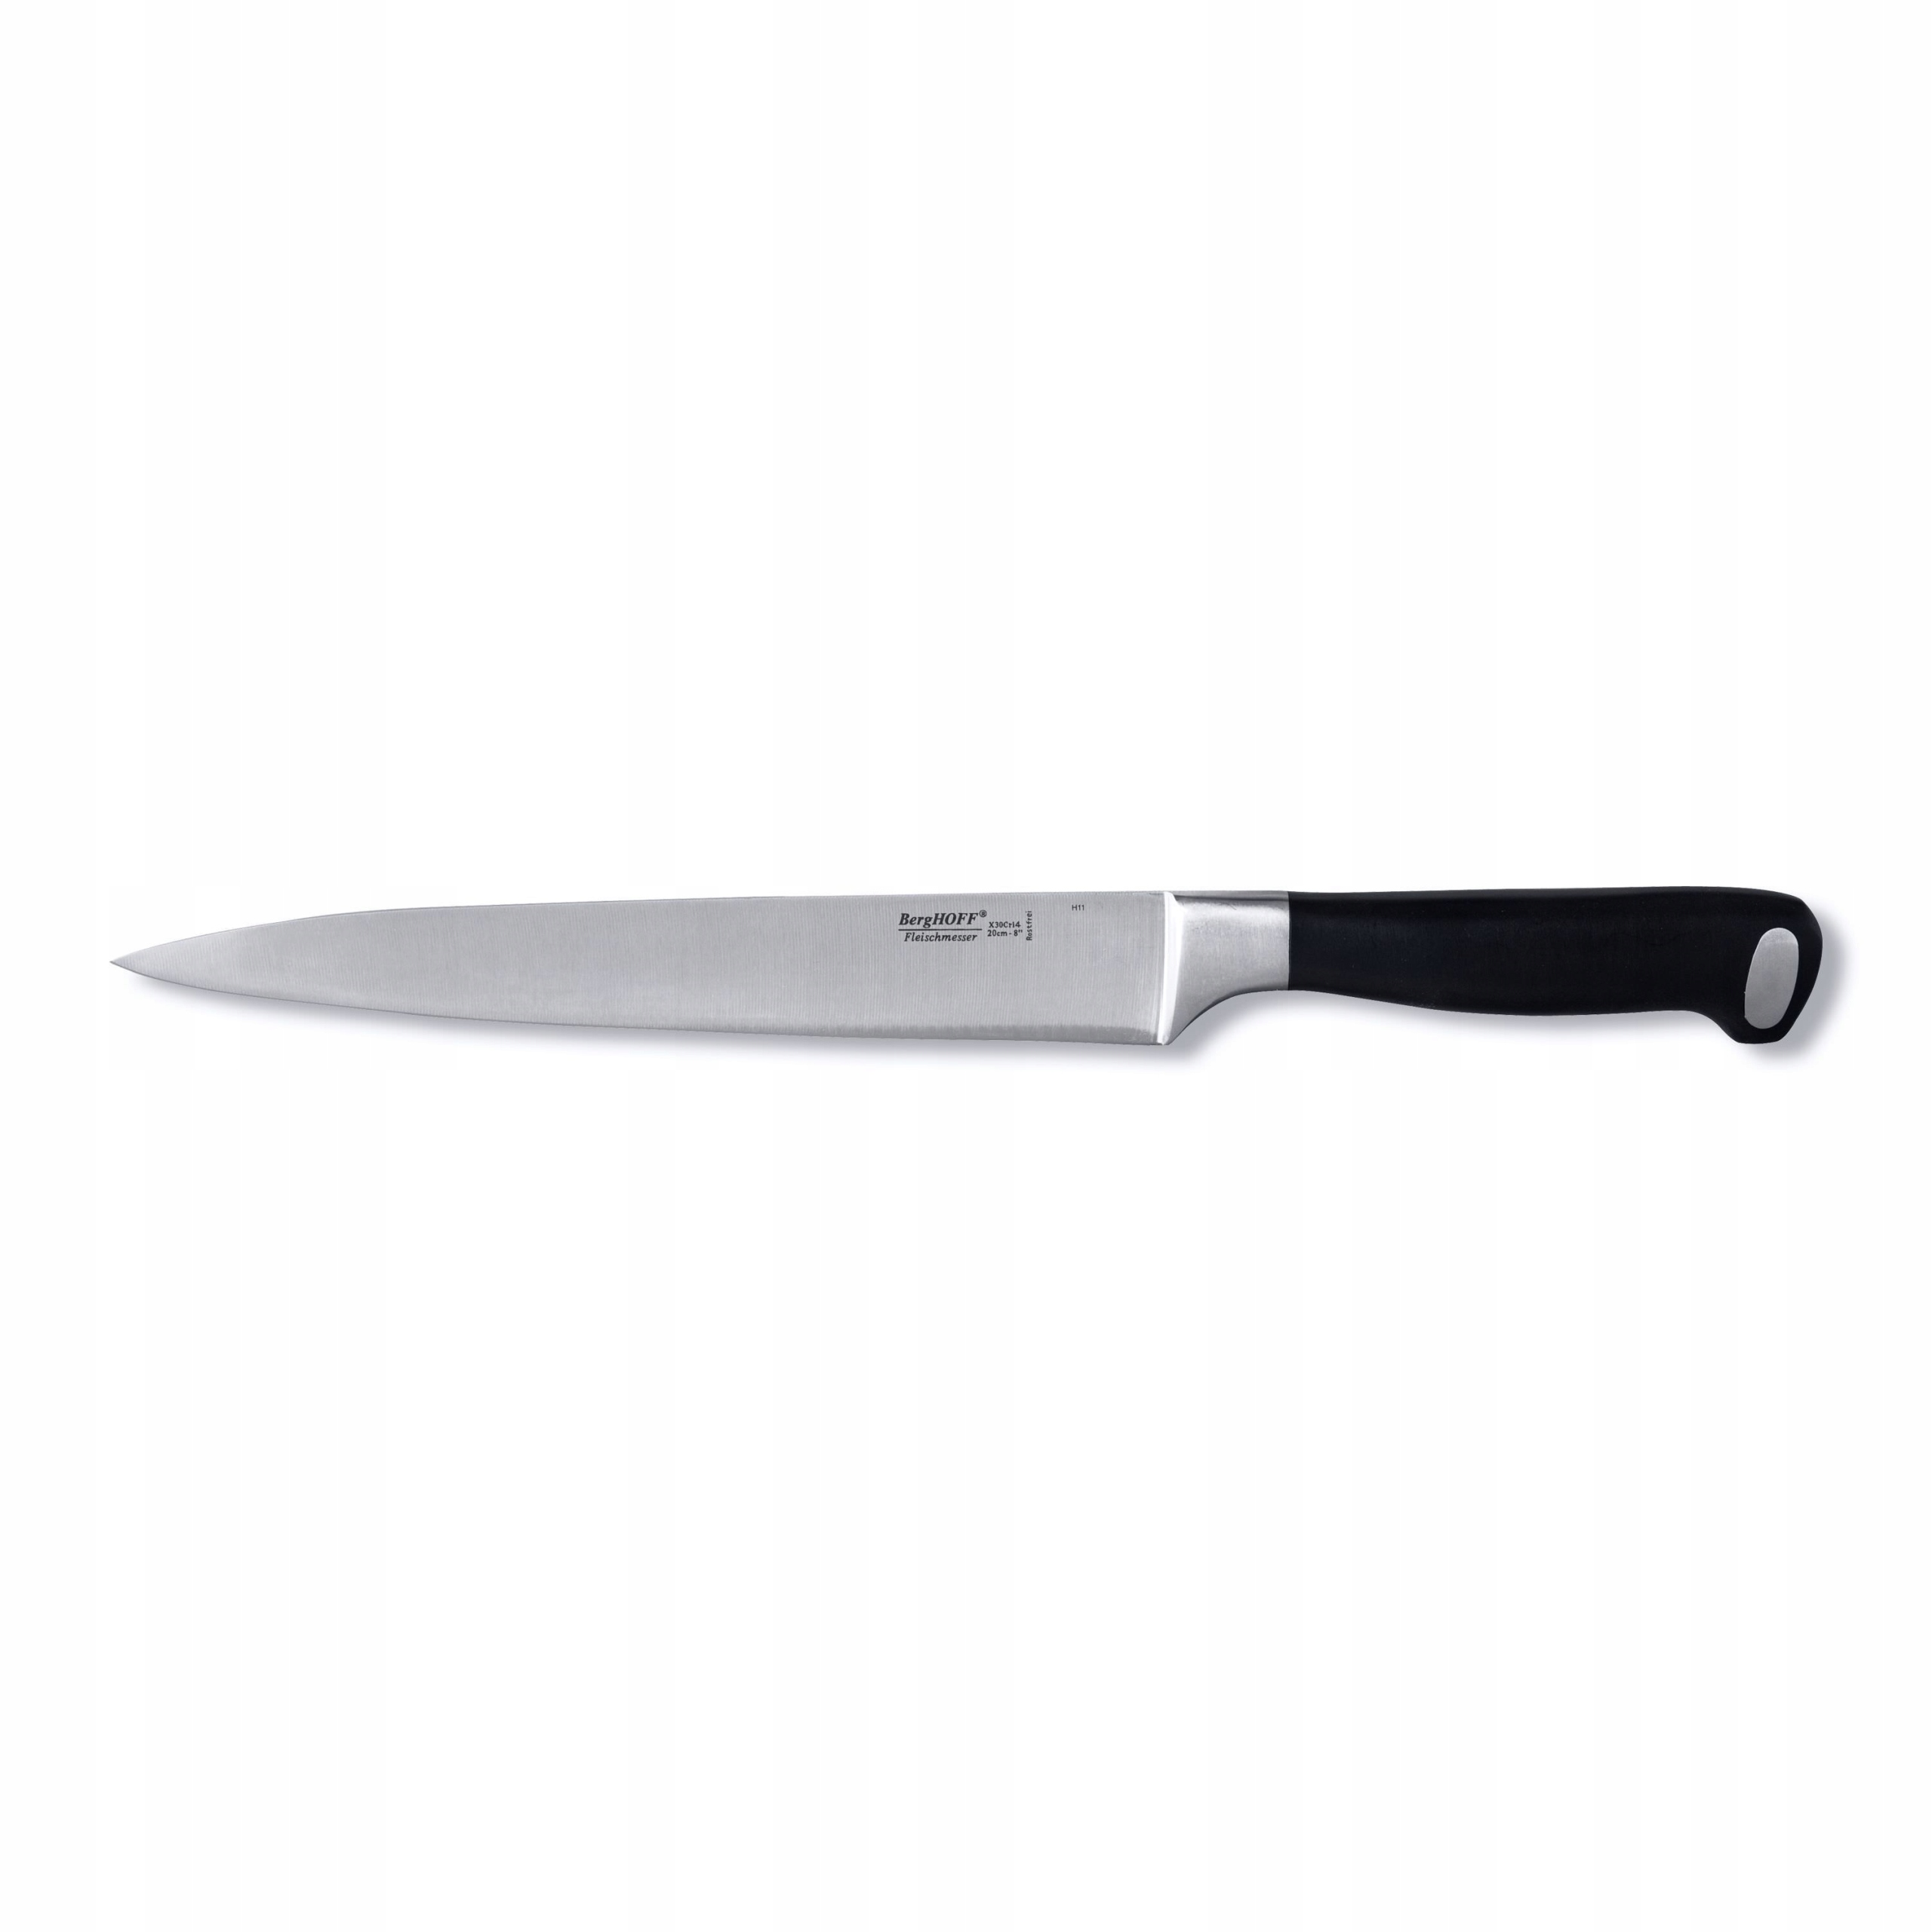 Кухонные ножи 20 см. Нож для овощей Rondell cascara 9 см Rd-689. Нож поварской BERGHOFF 4490060. Нож BERGHOFF Gourmet 1307142. Нож сантоку BERGHOFF 3502500.